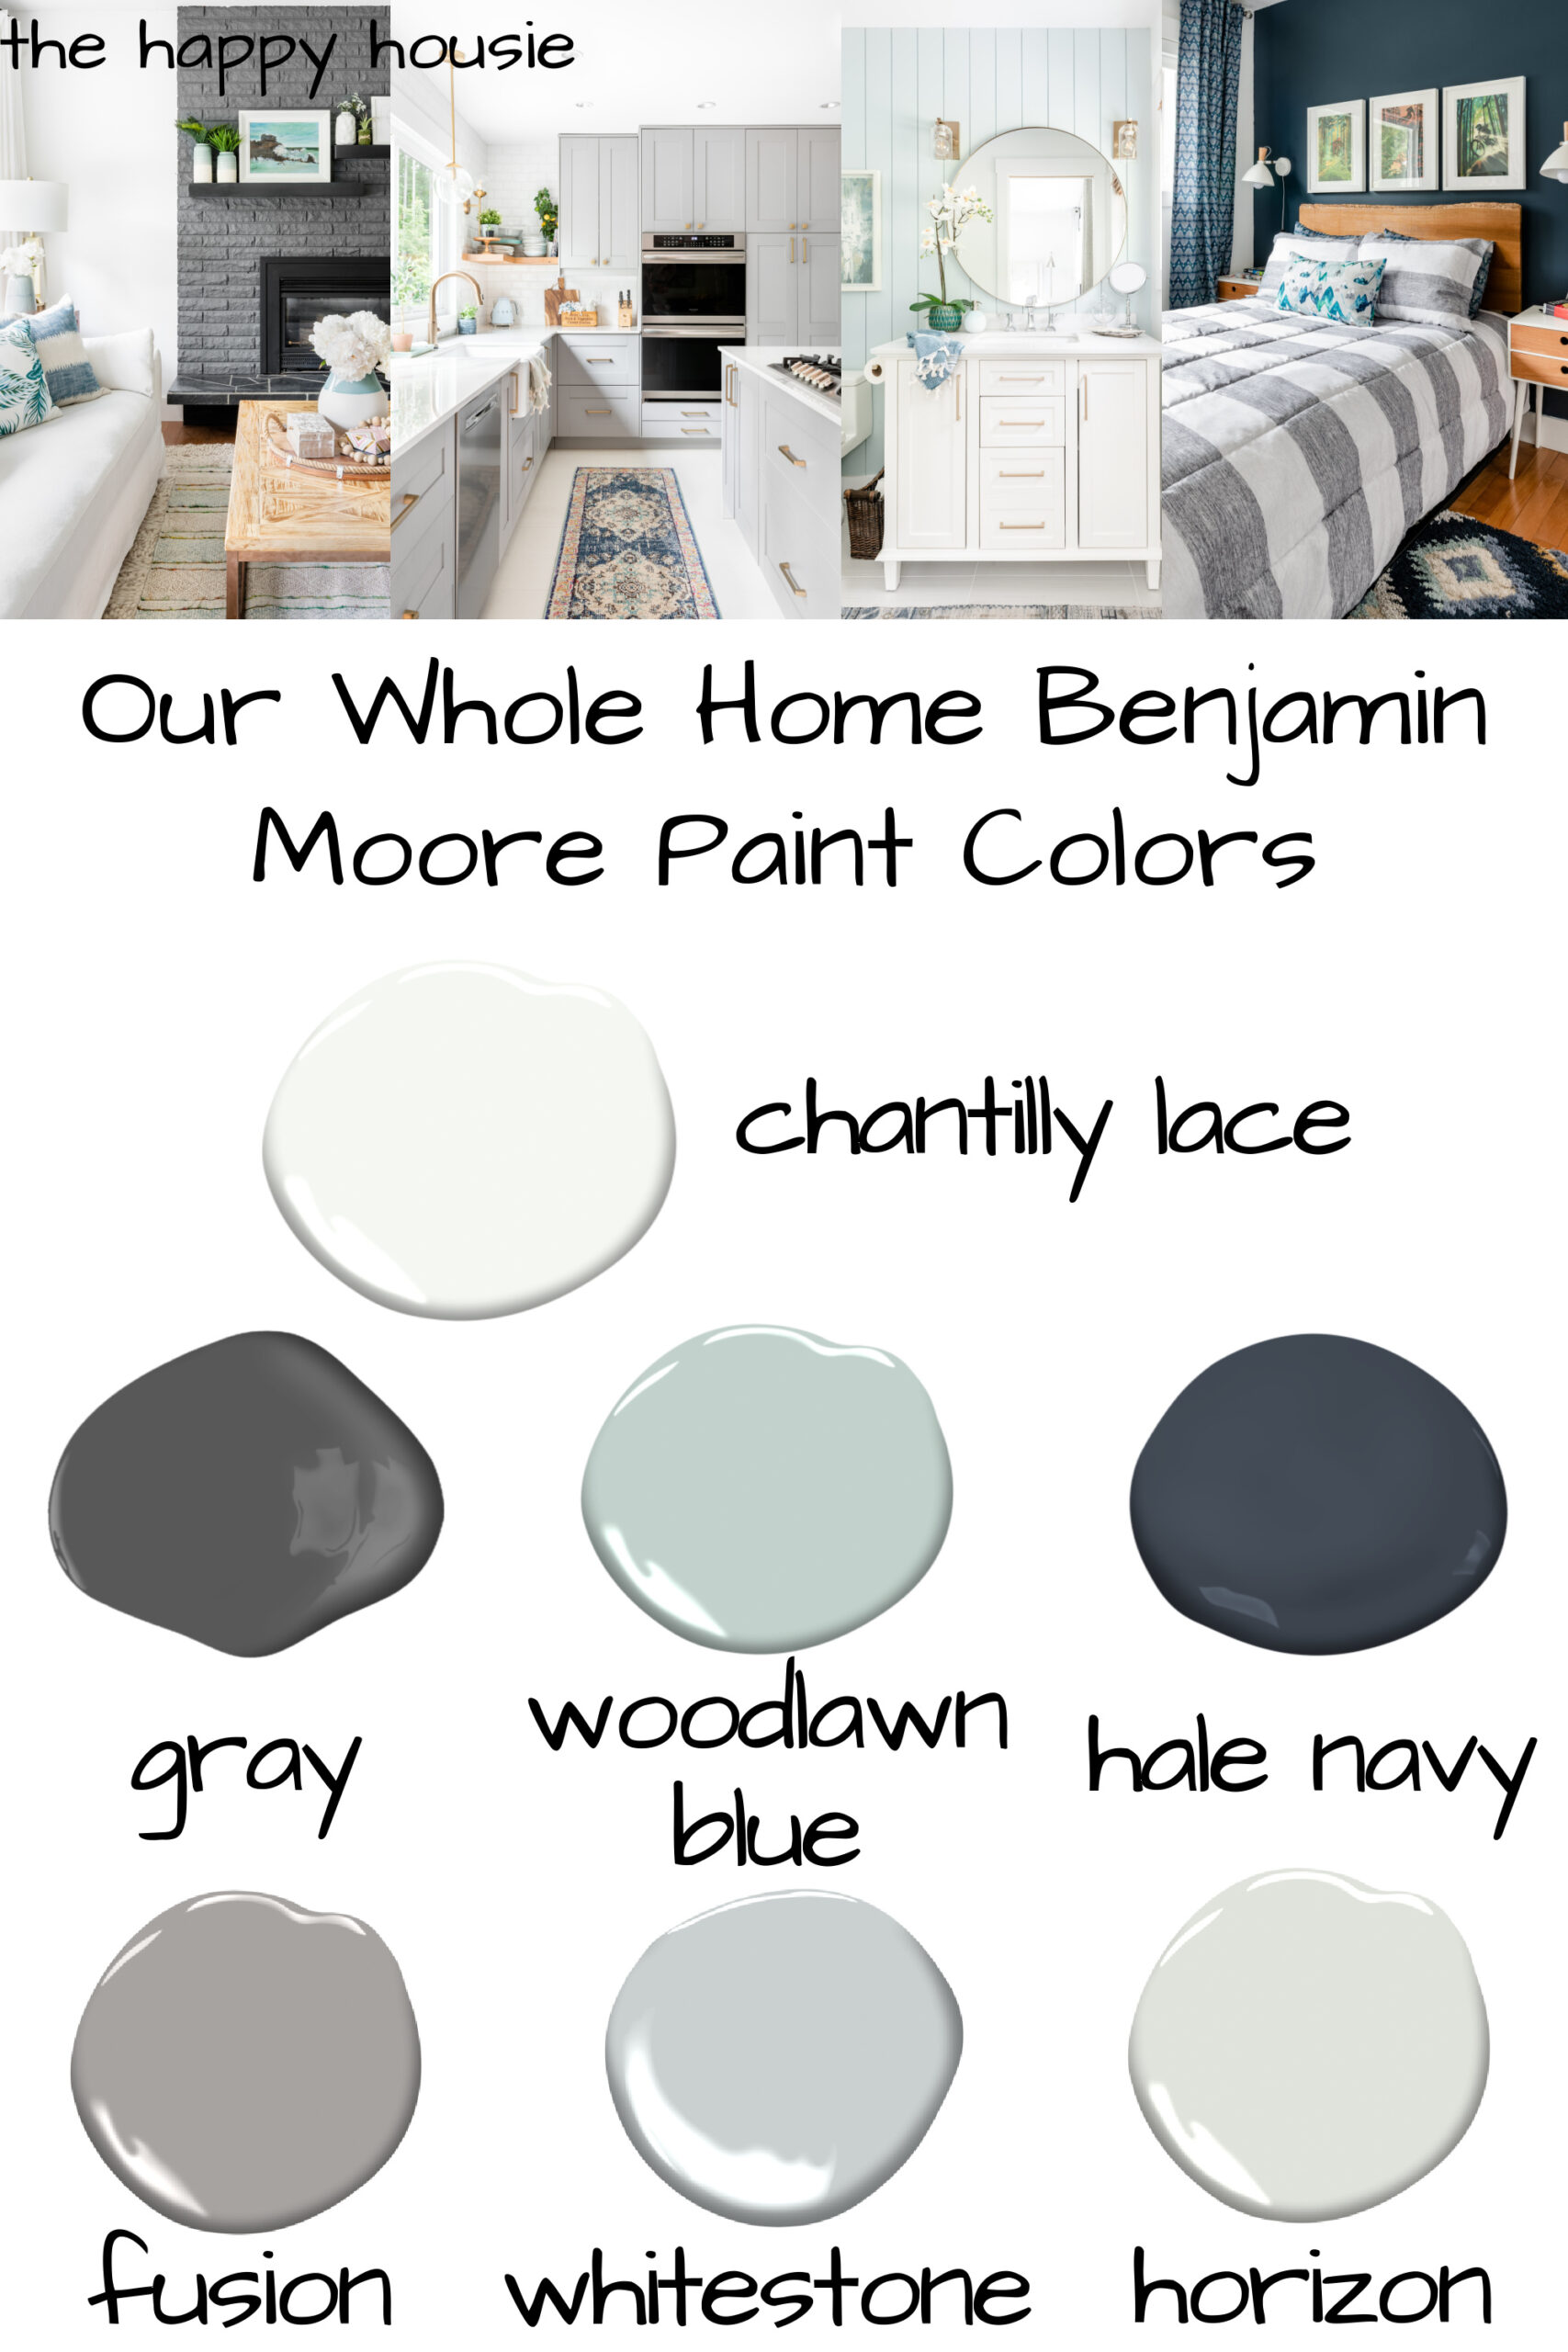 6 Gorgeous Light Blue Grey Paint Colors for Calm Interiors - Hello